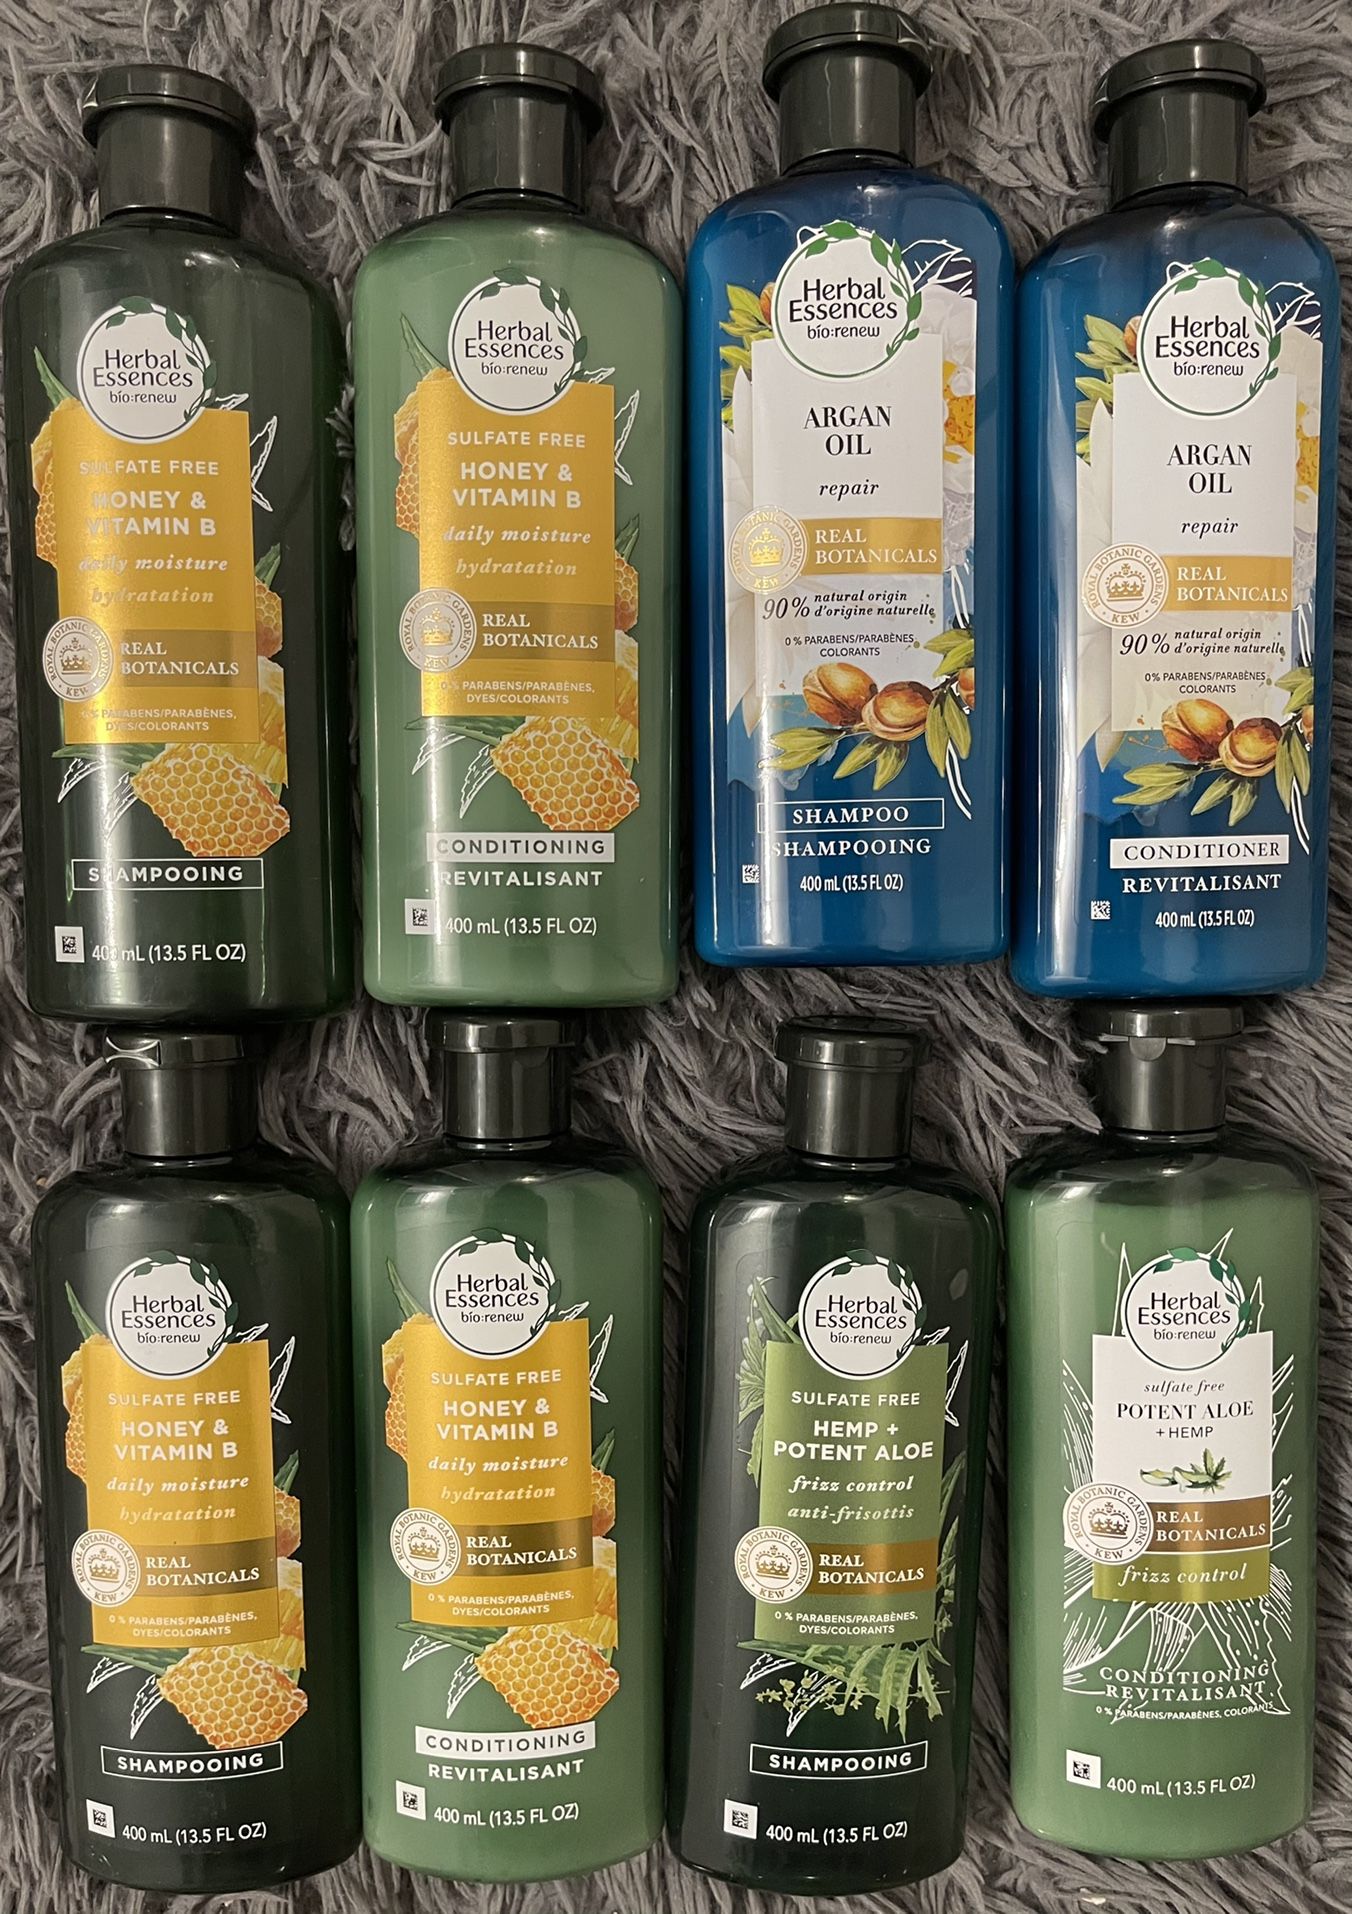 Herbal Essences Shampoo And Conditioner $3 each 